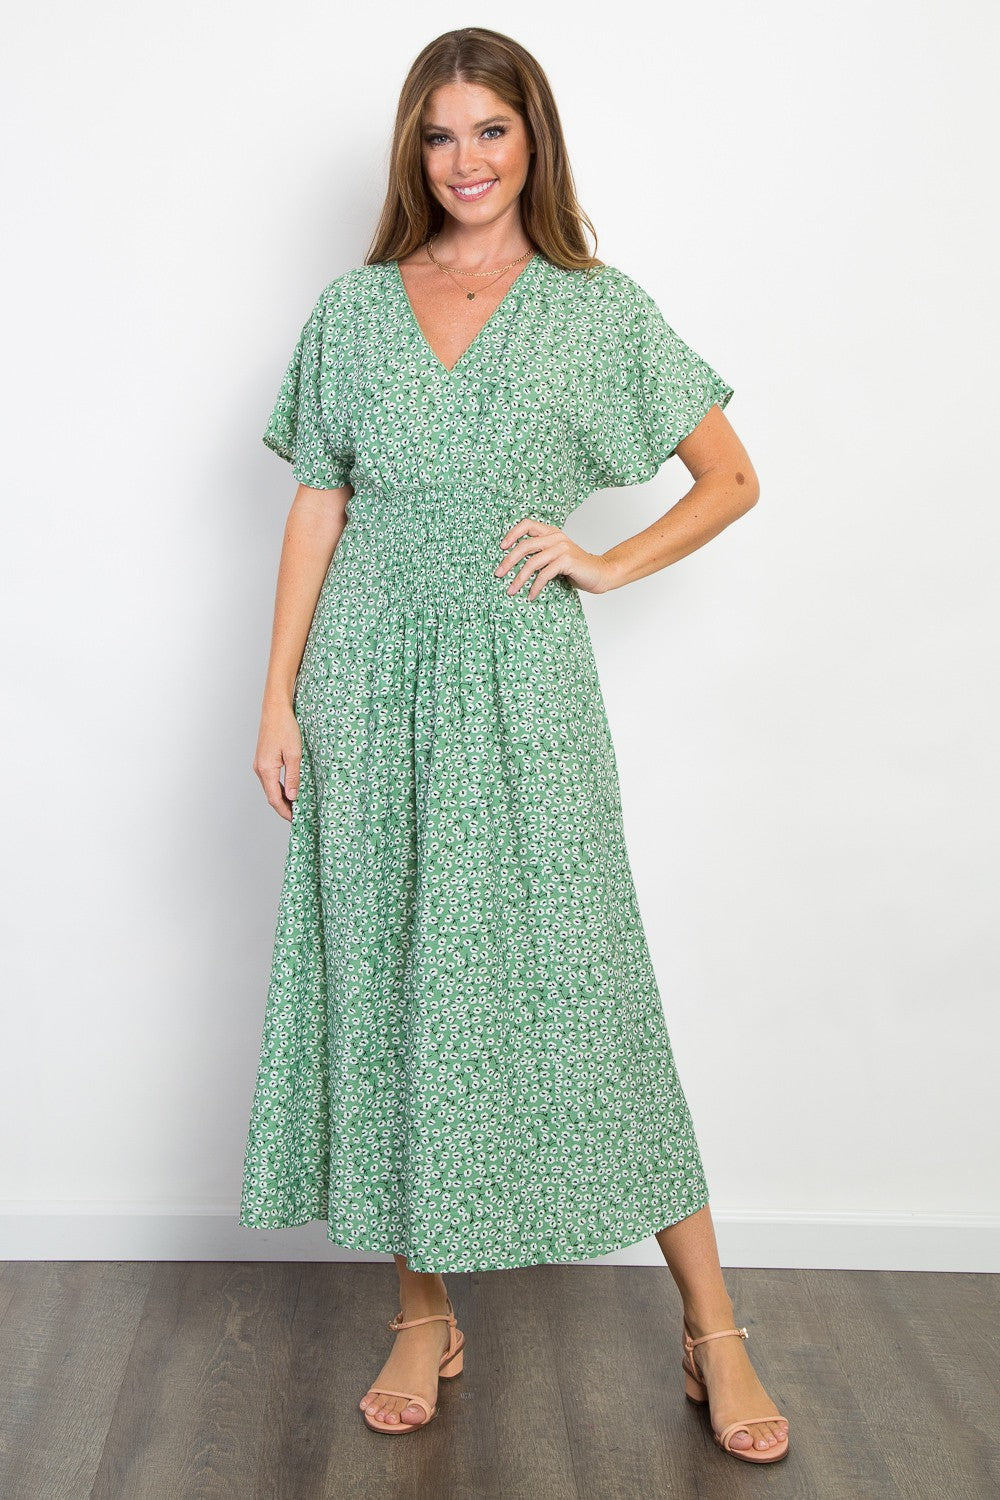 Green Shirred Animal Print Dress - Posh West Boutique